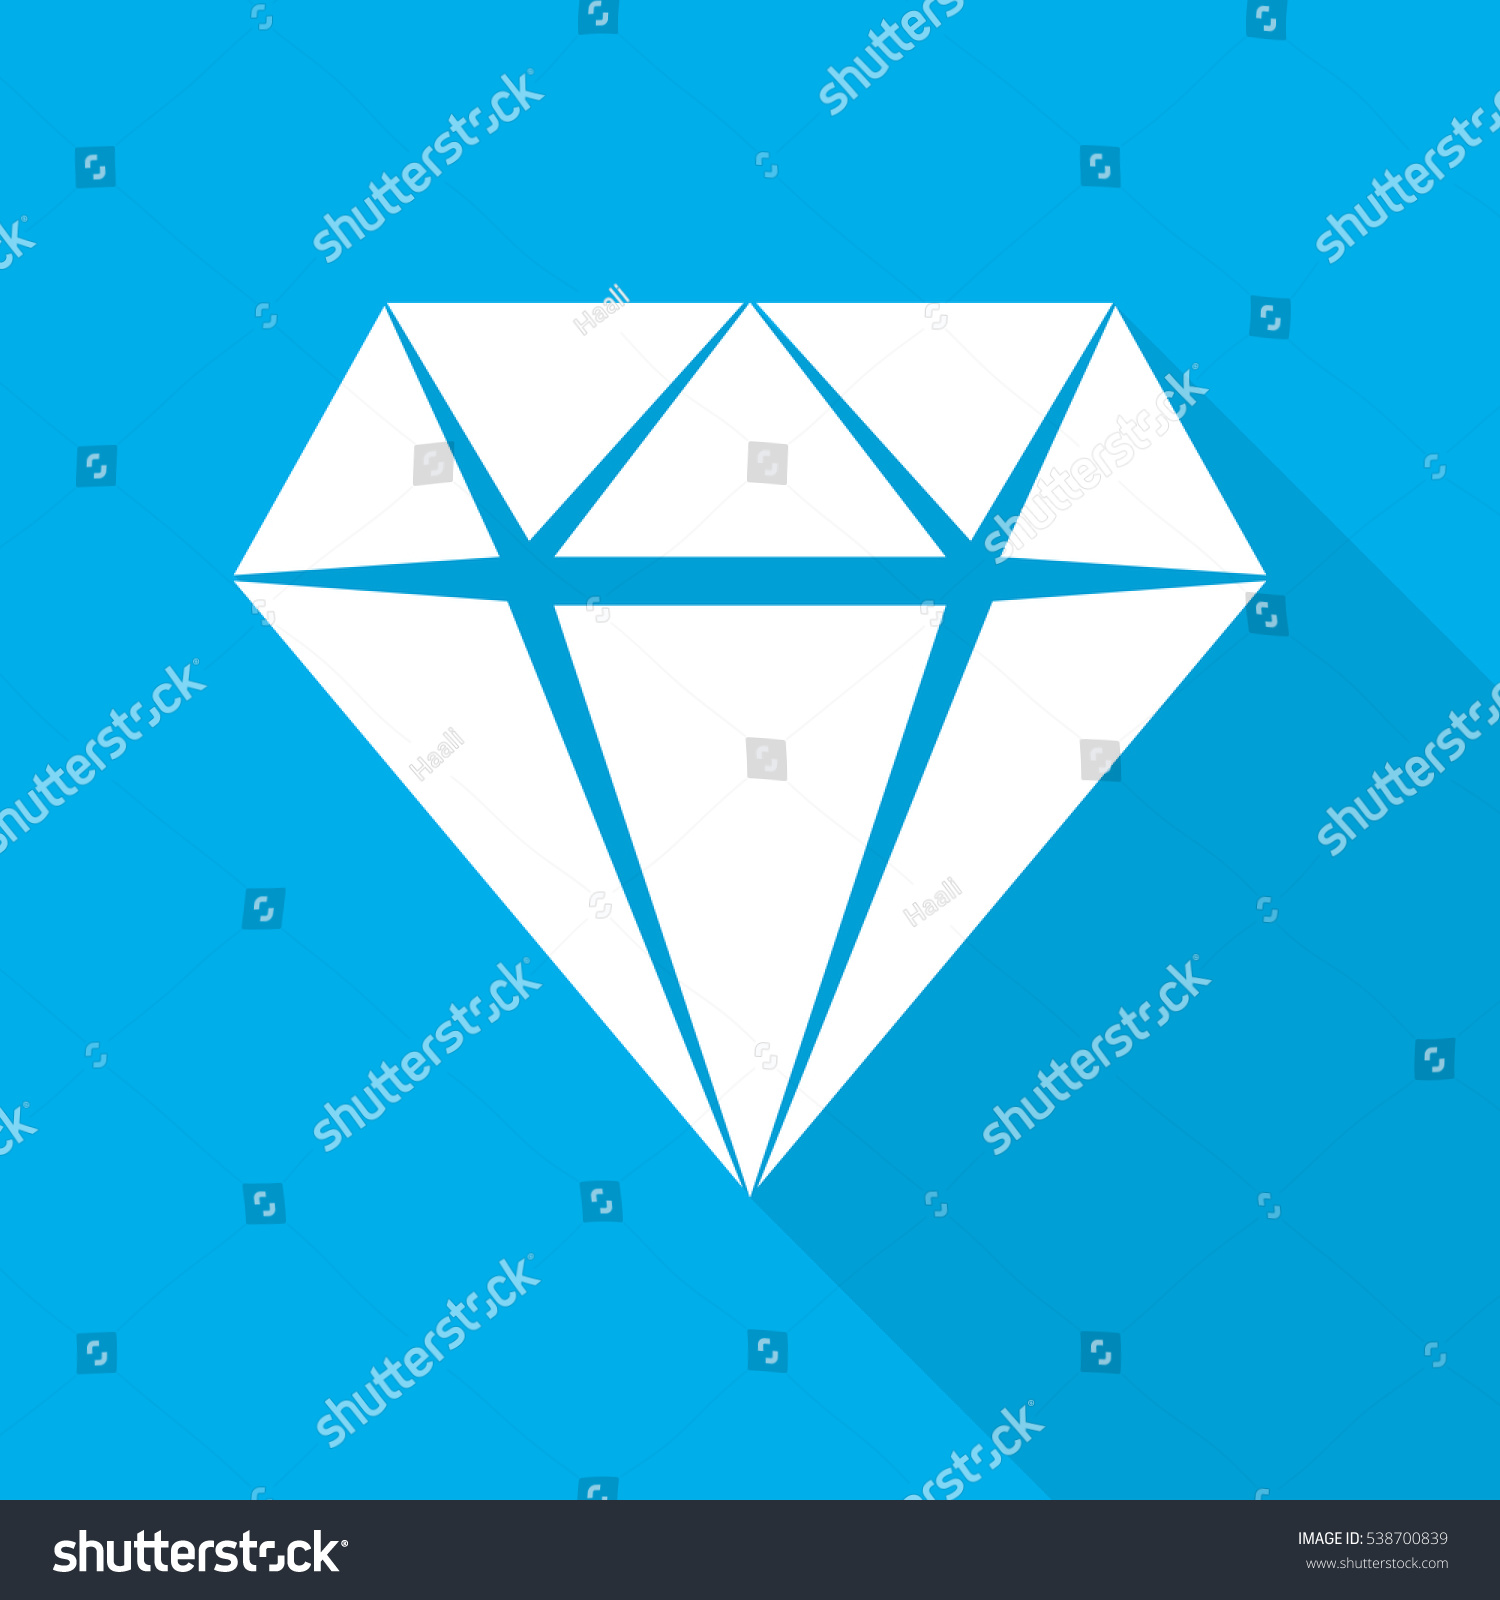 Edit Vectors Free Online - Simple diamond | Shutterstock Editor